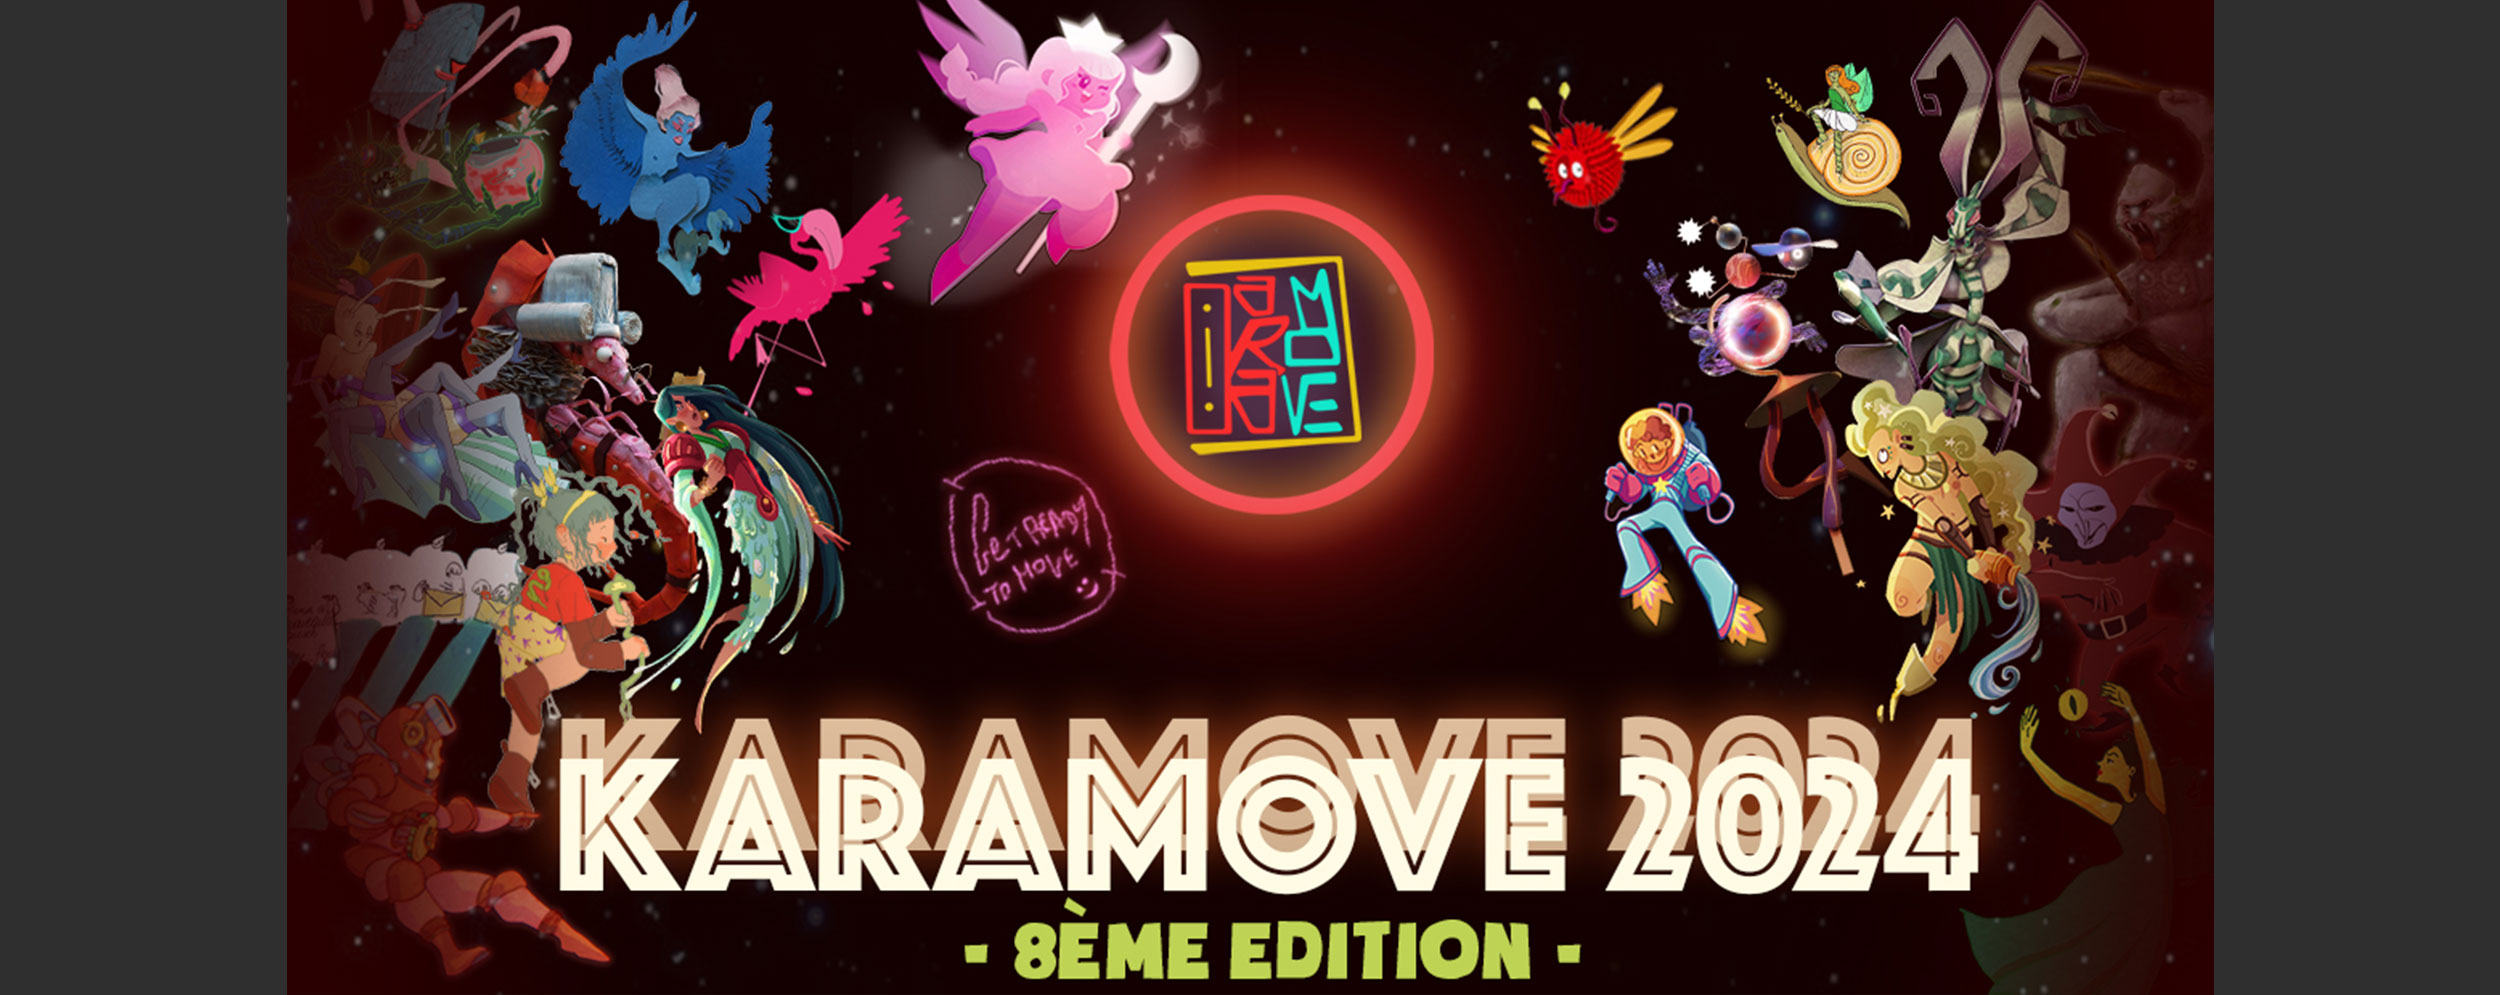 Le festival d’animation Karamove lance sa 8ème édition en partenariat avec Dada ! Animation